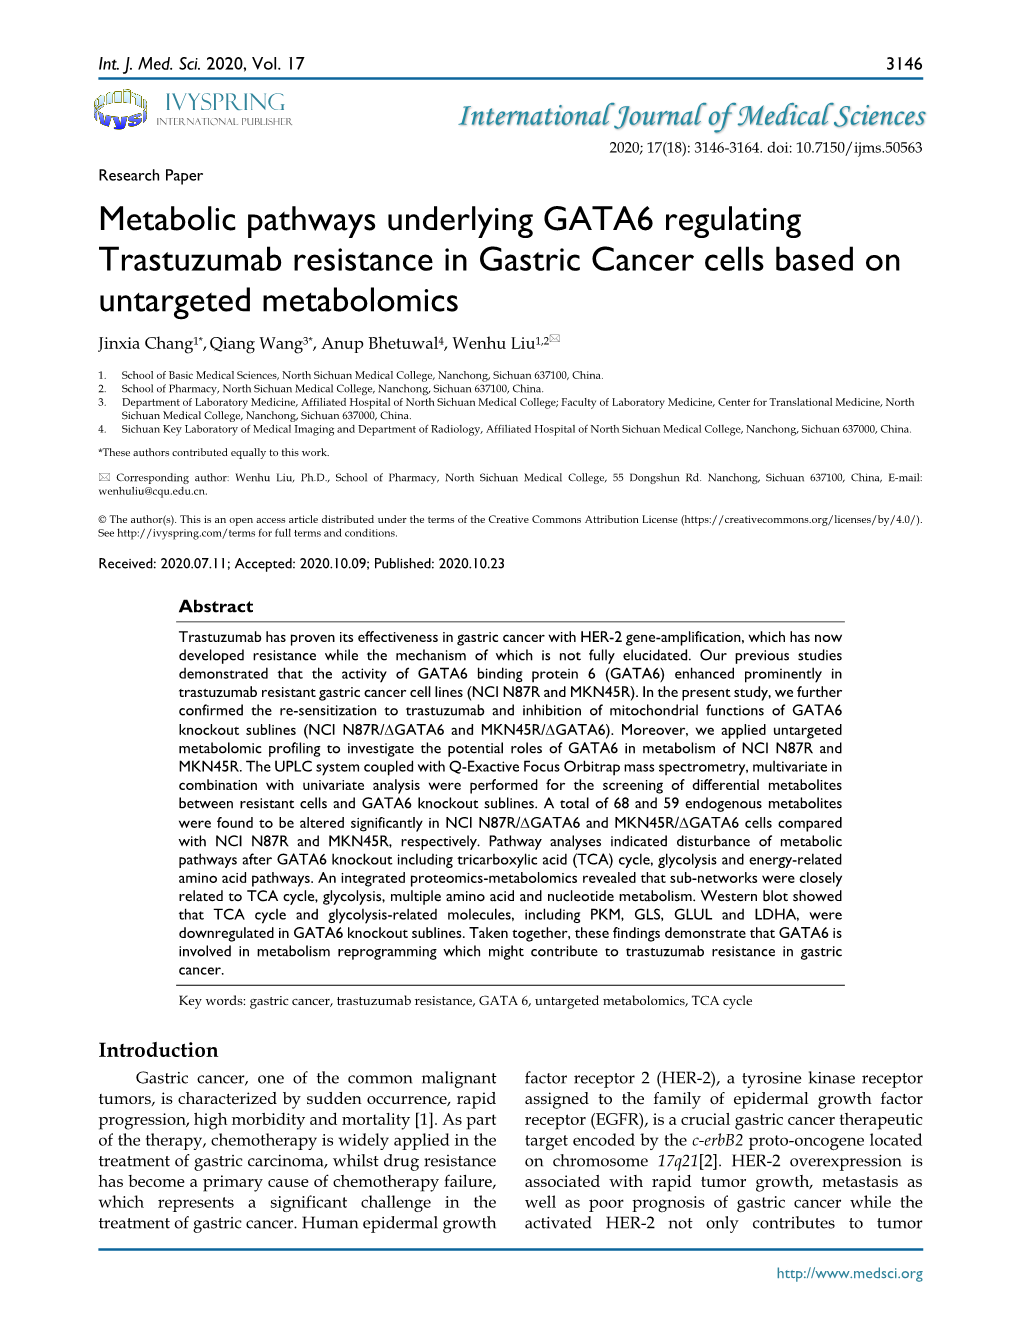 Metabolic Pathways Underlying GATA6 Regulating Trastuzumab